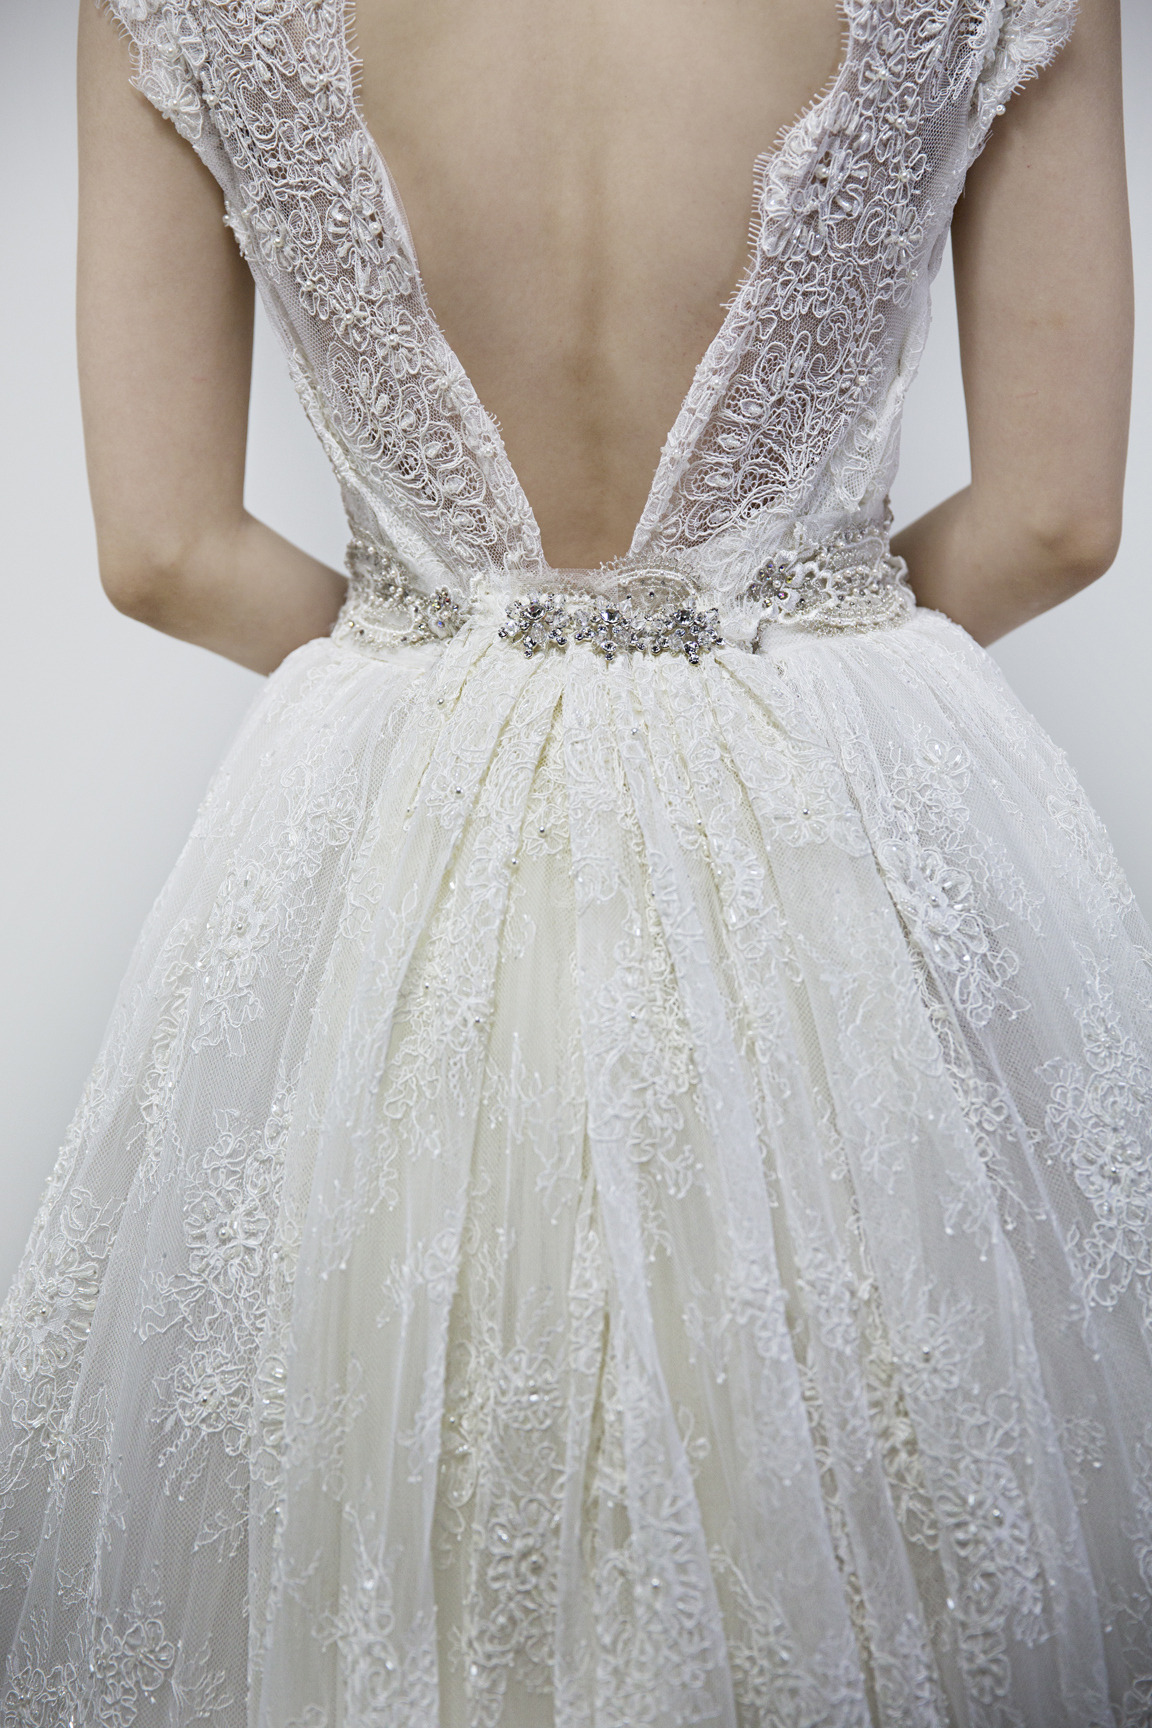 “ Francesca Miranda 2014 Bridal Collection
”